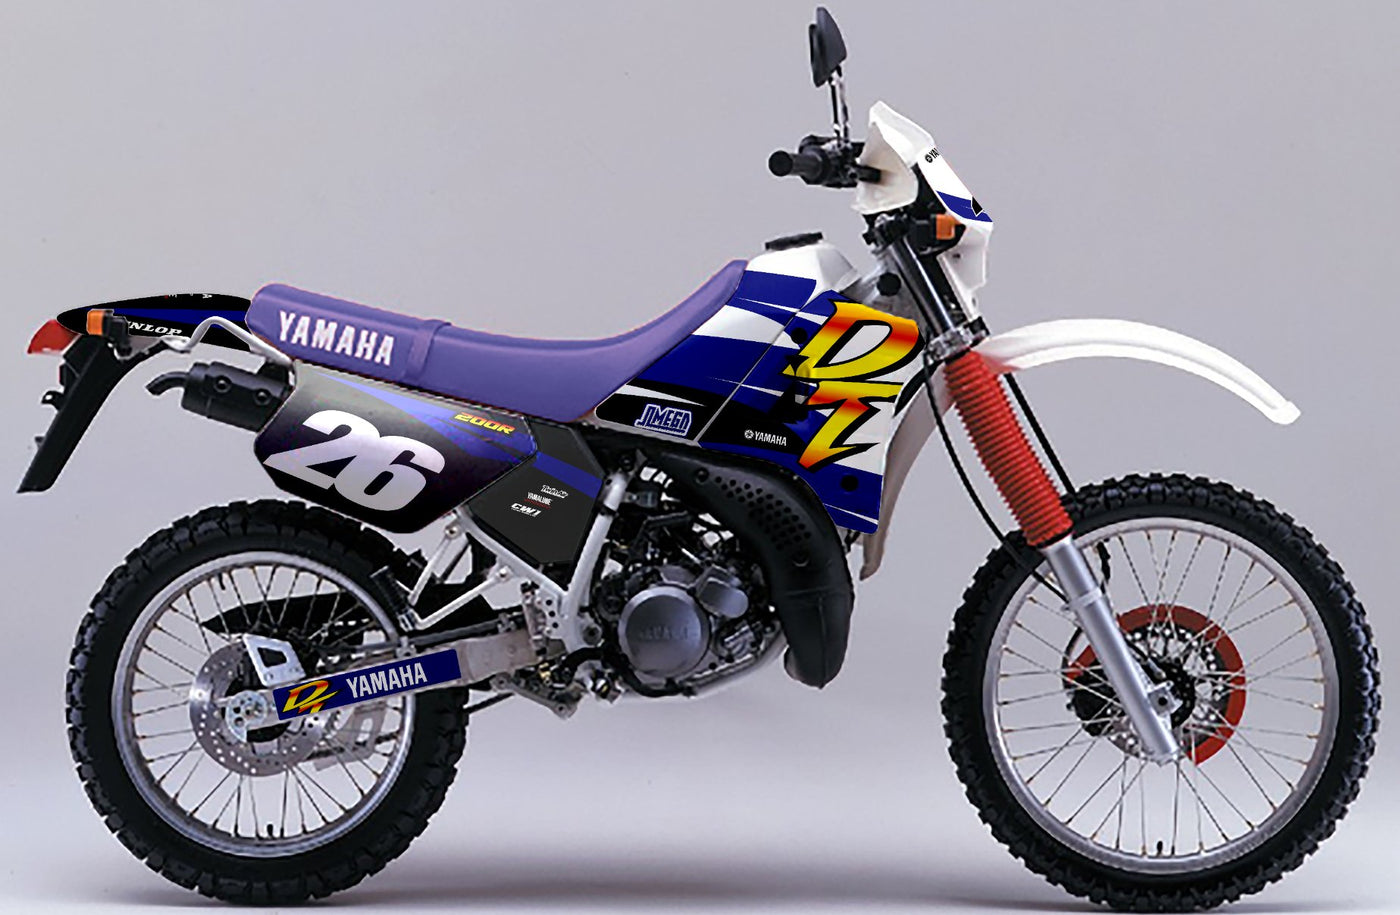 yamaha dt200r graphics kit (white - blue - black)